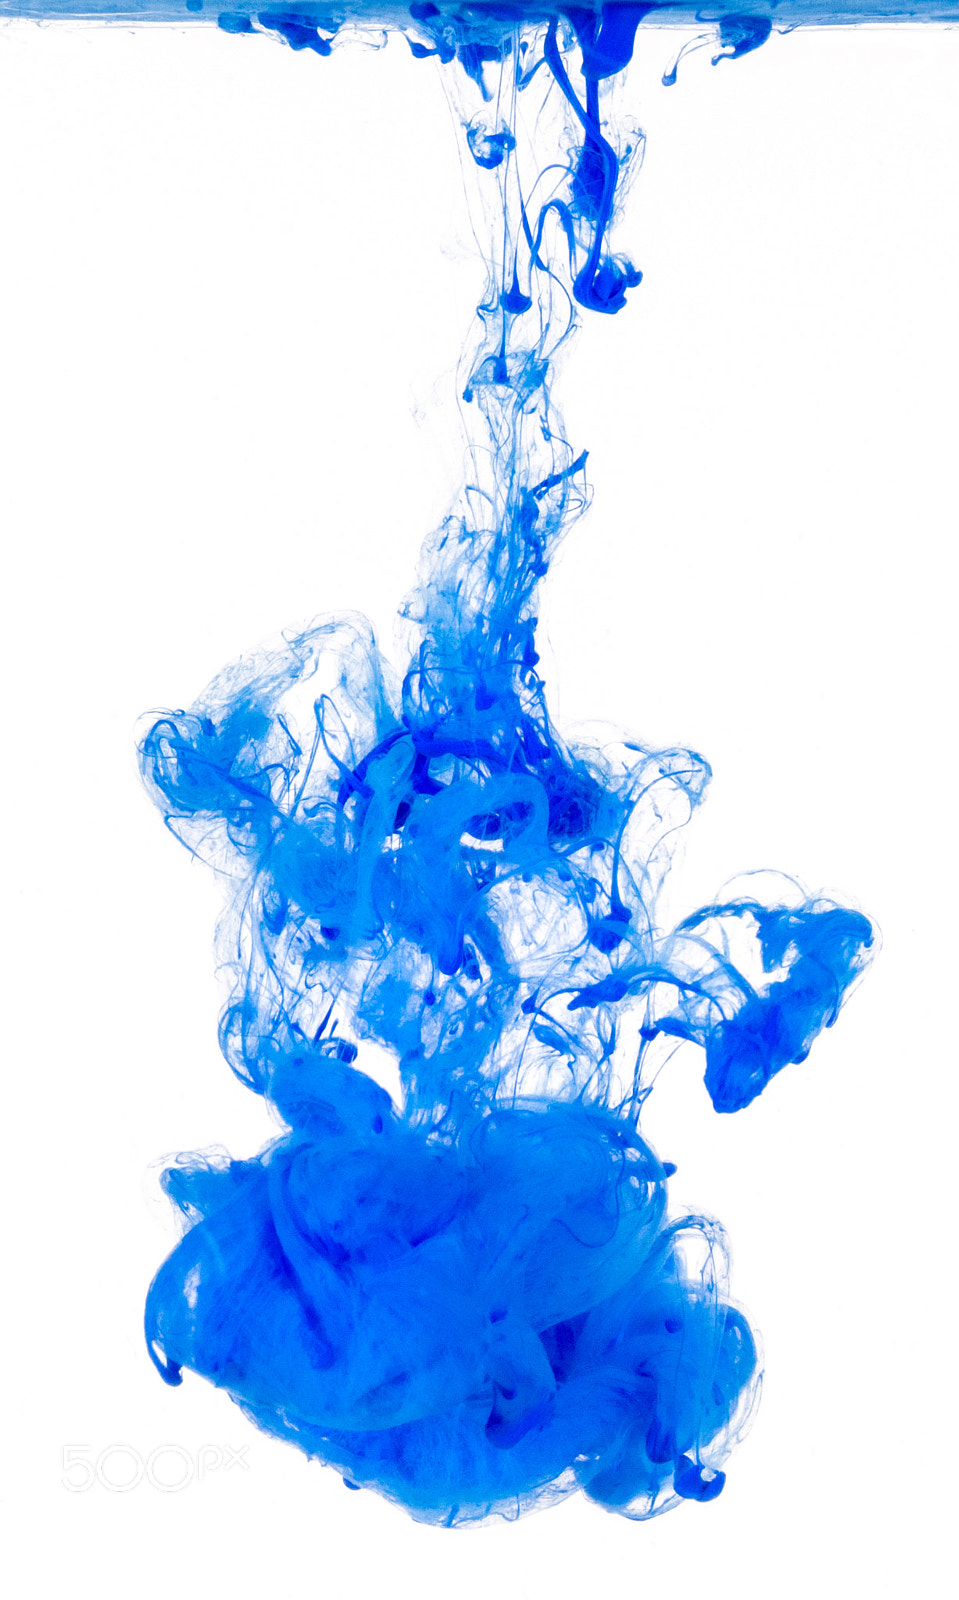 Nikon D5 sample photo. Abstract blue liquid paint cloud photography